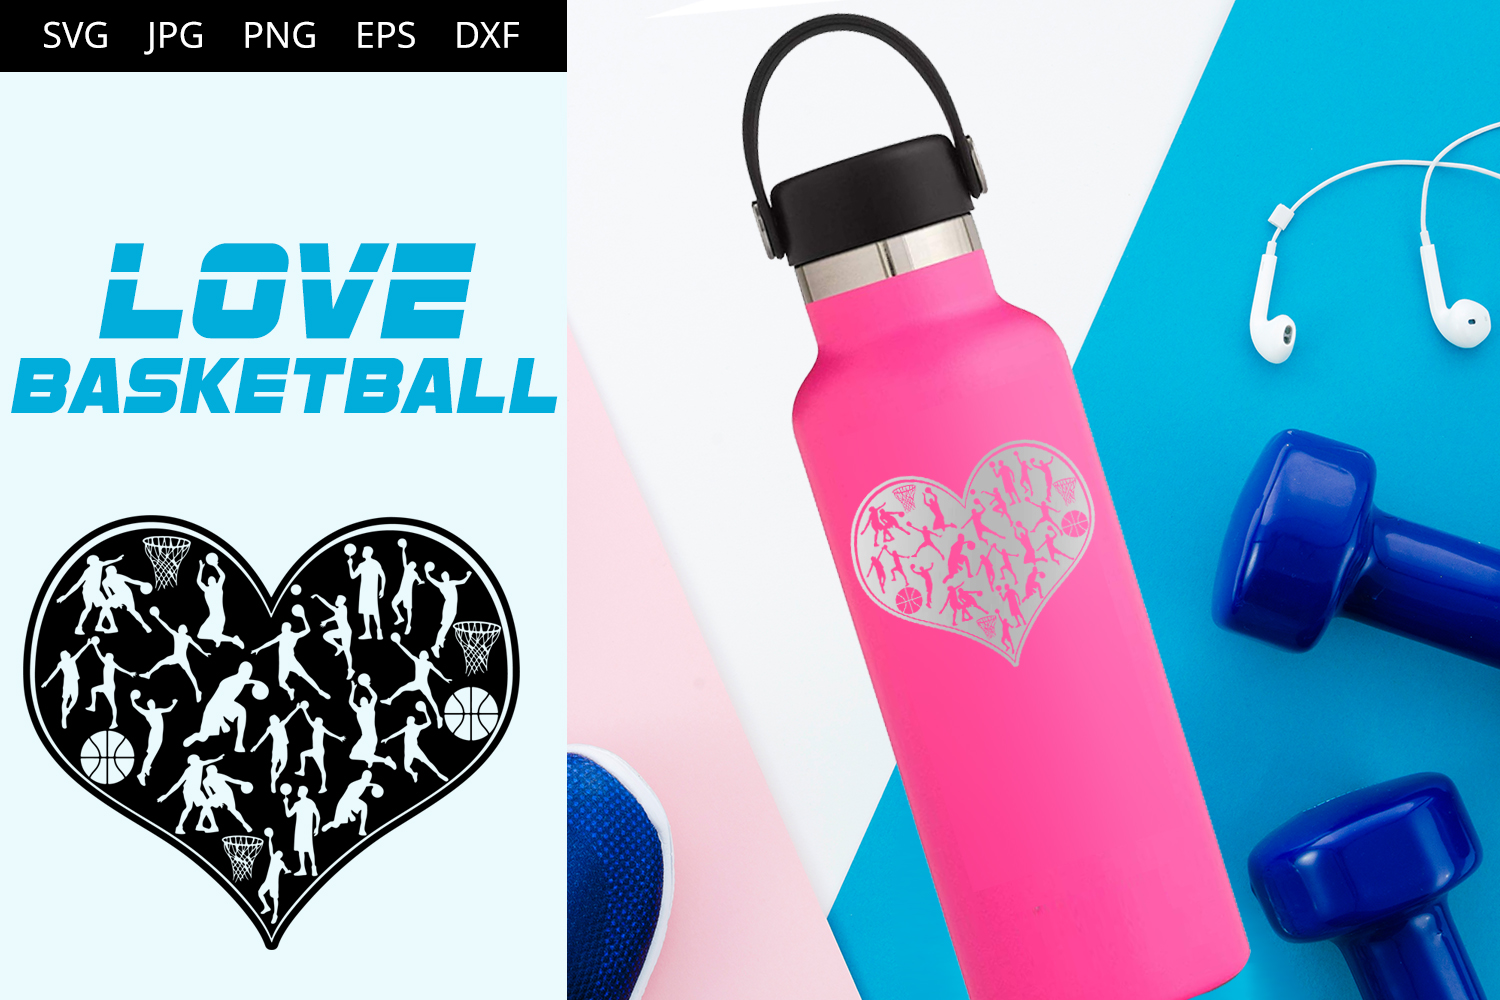 Download Love Basketball SVG Vector (359852) | Illustrations ...